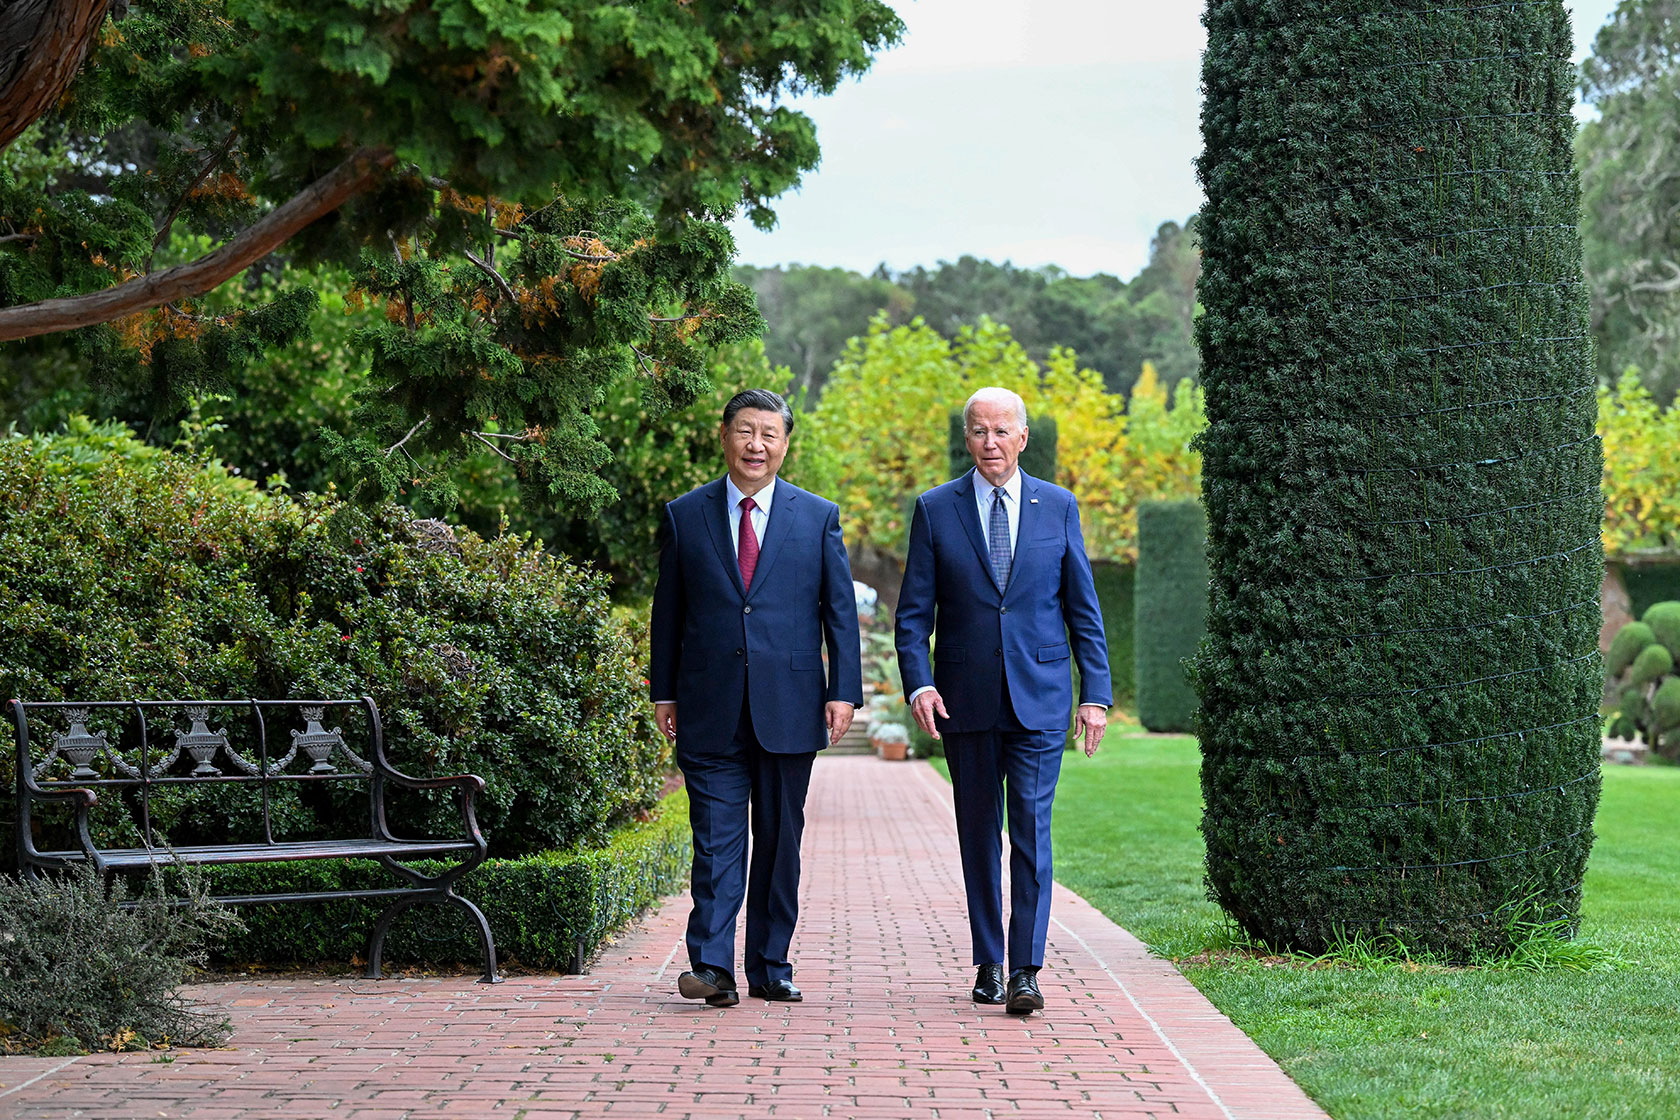 Chinese President Xi Jinping and U.S. President Joe Biden take a walk after their talks in the Filoli estate.